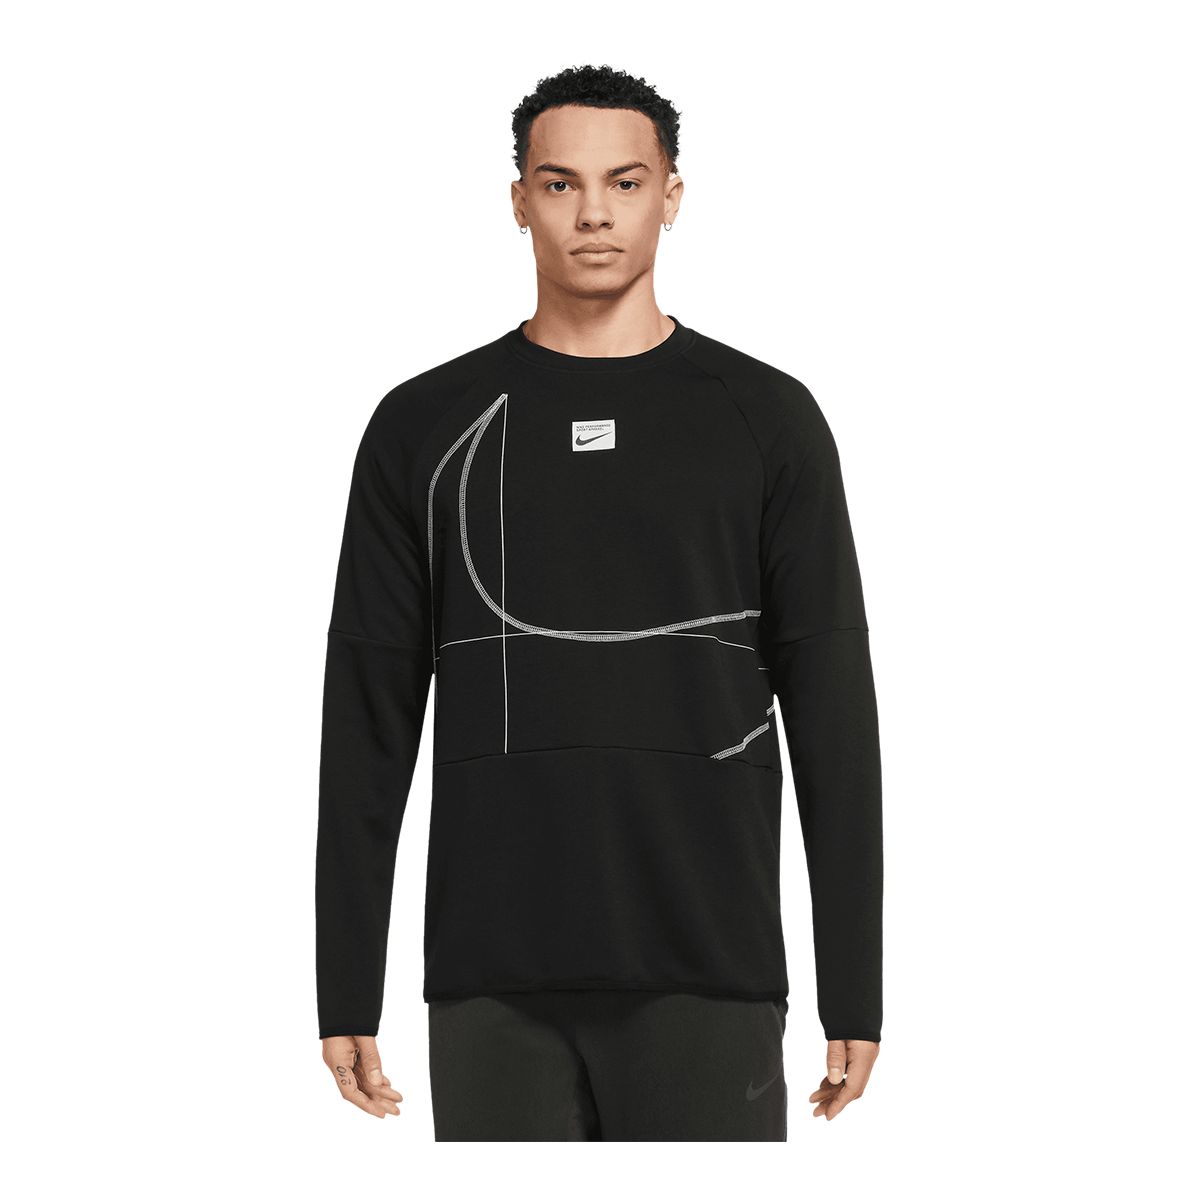 Nike Men's Dri-FIT Q5 Fleece Sweatshirt